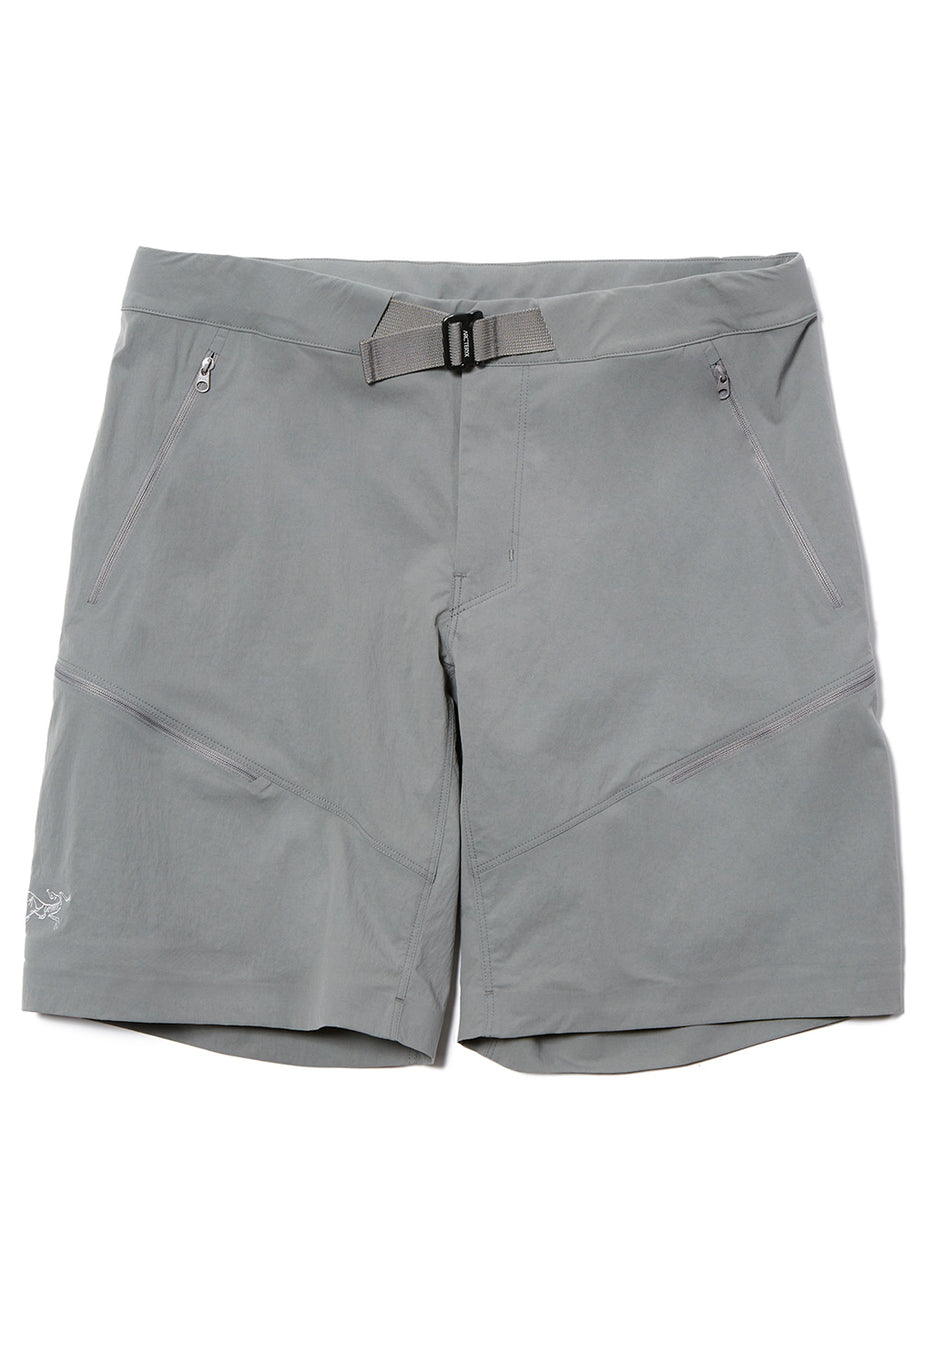 Arc'teryx Men's Gamma Quick Dry Shorts 9 inch 6